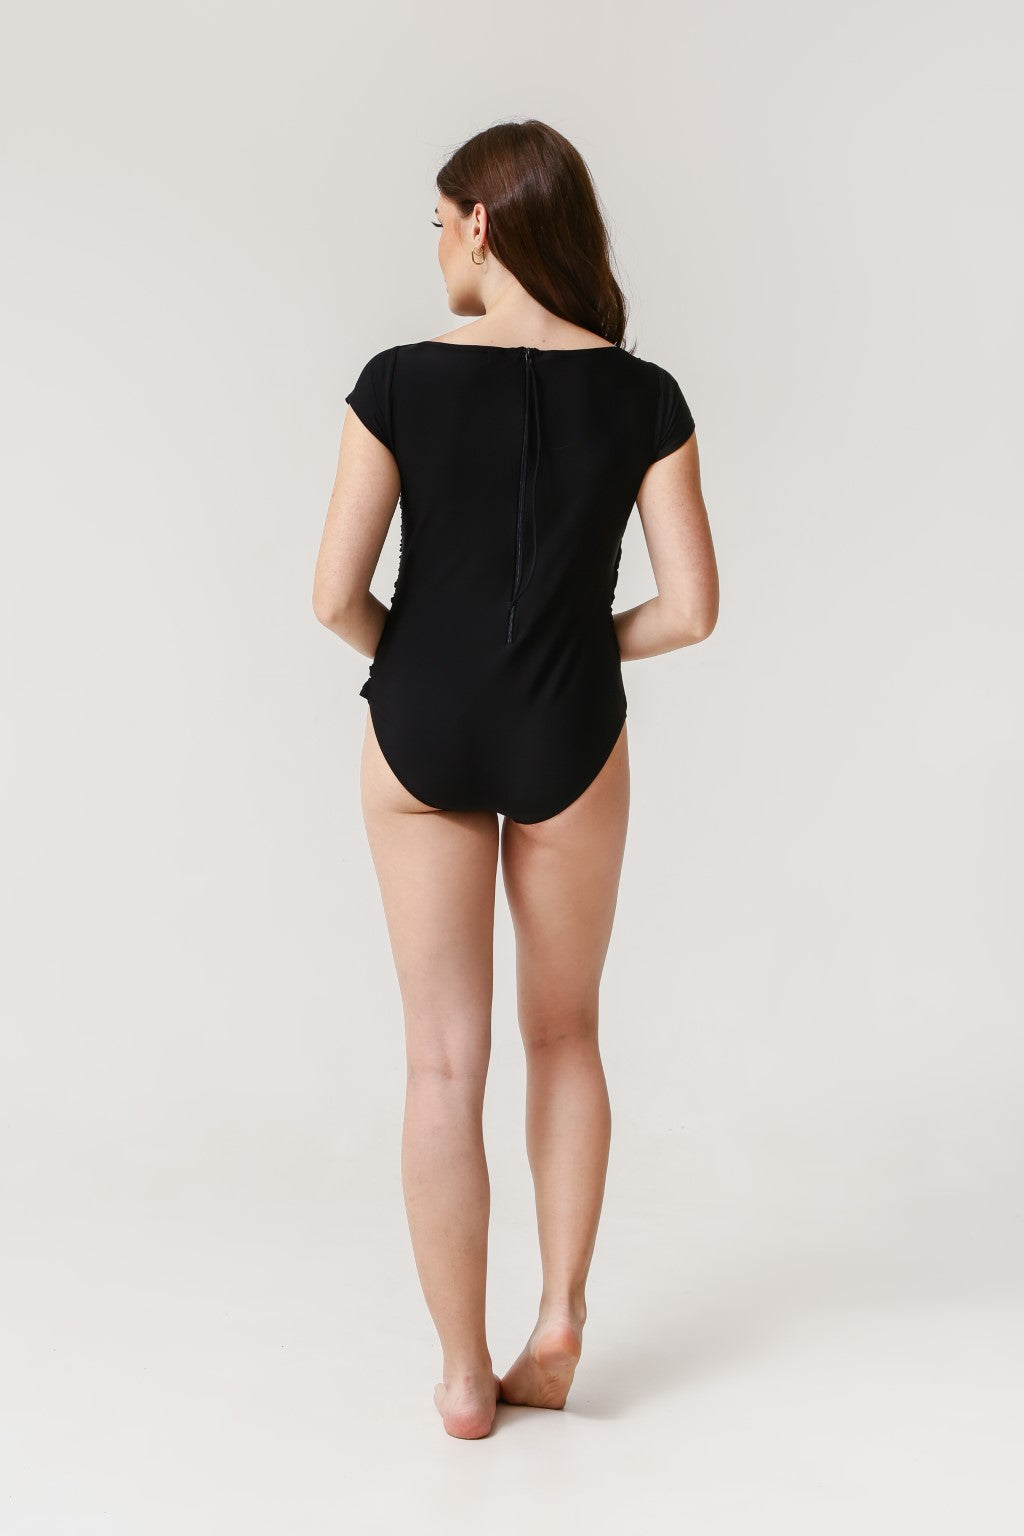 Lanuuk Diana Midi Swimsuit - Black | Short Sleeve One Piece Full Coverage Modest Swimwear Burkini